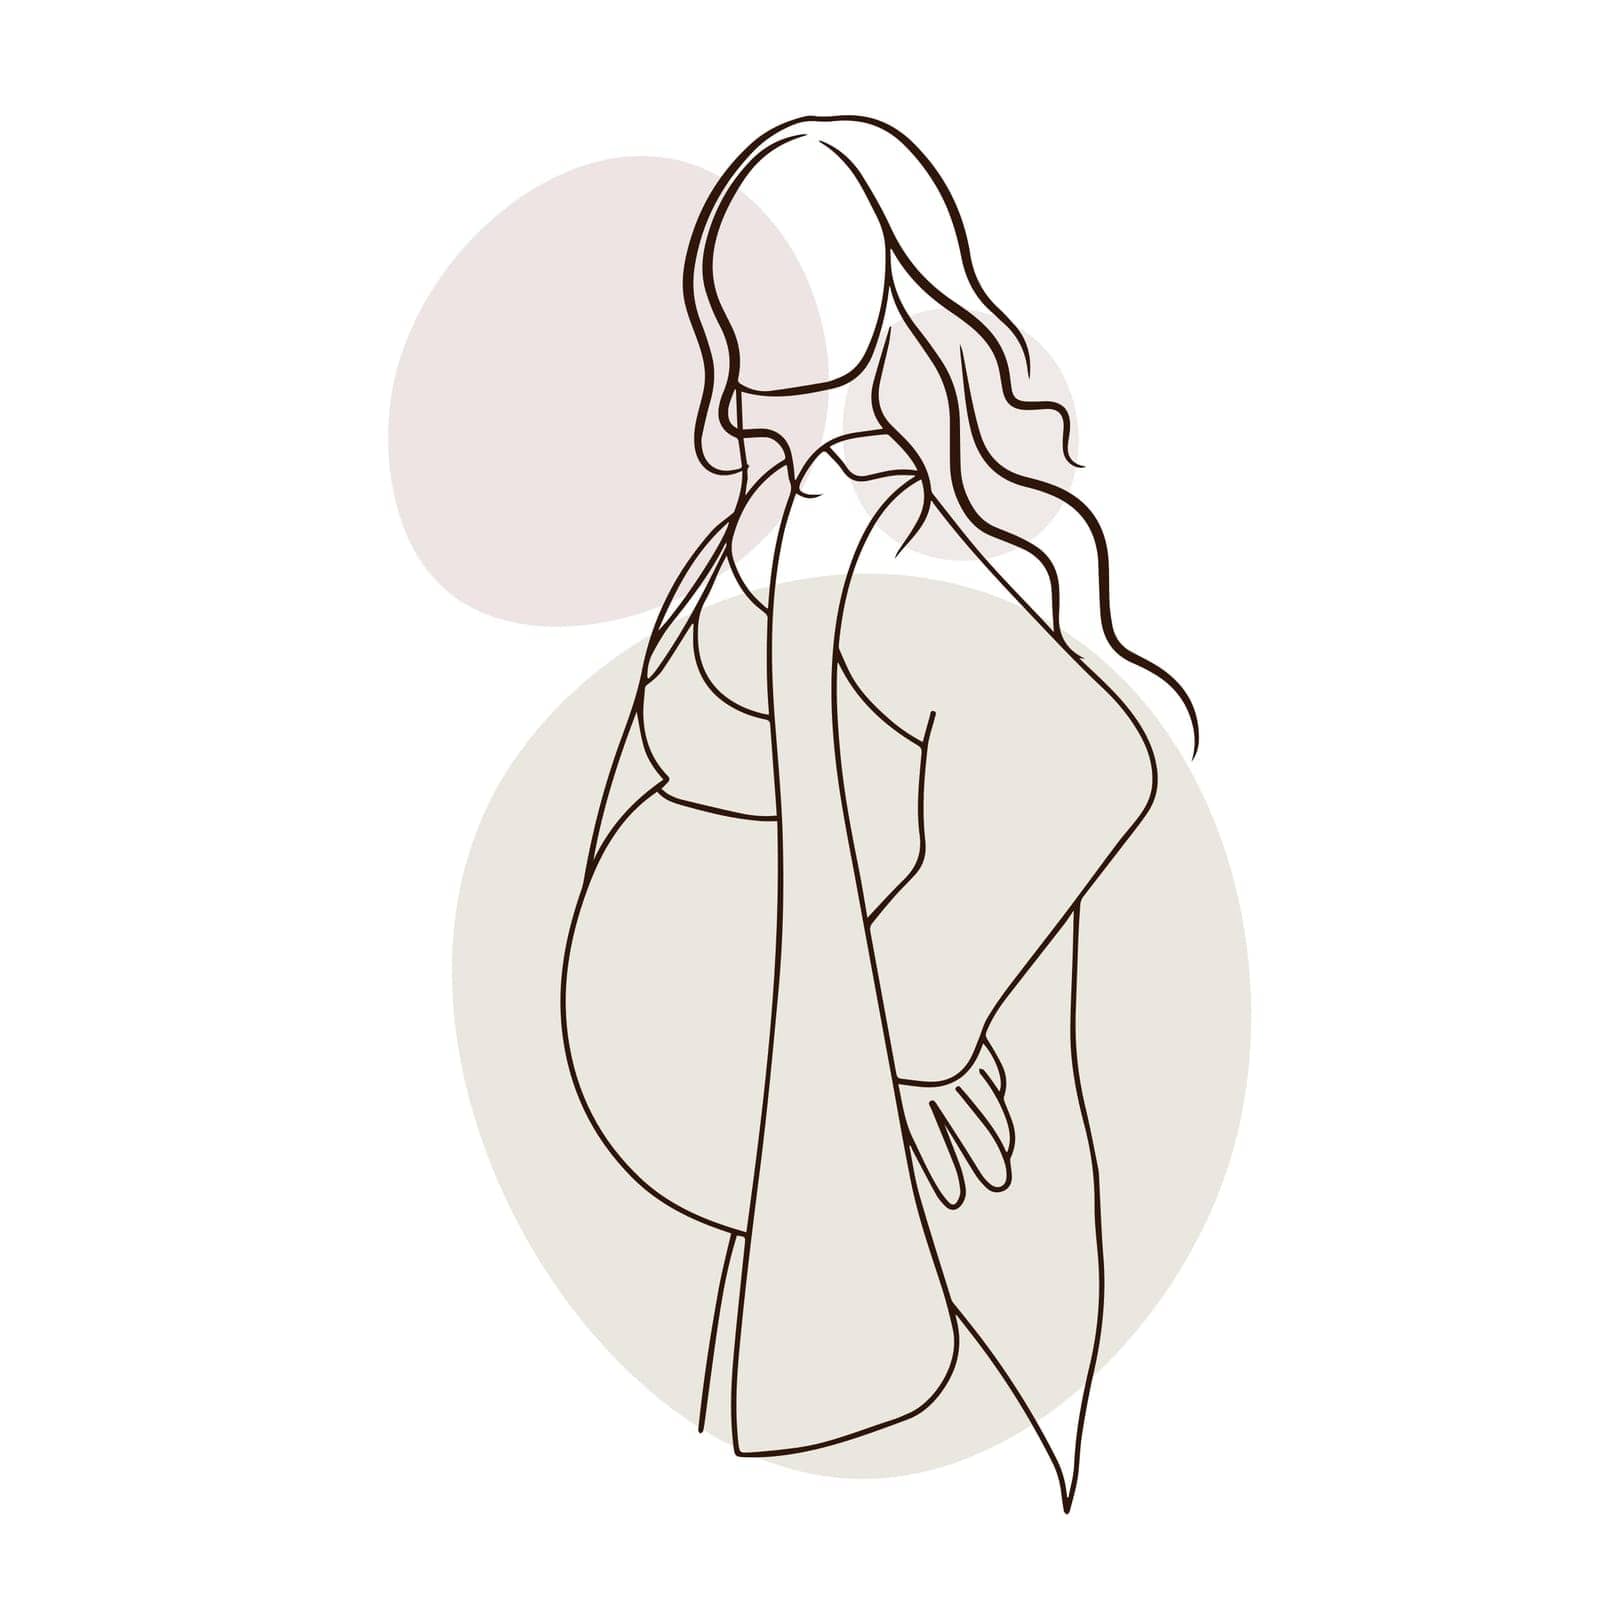 Fashionable pregnant girl, motherhood, big belly, contour illustration doodle